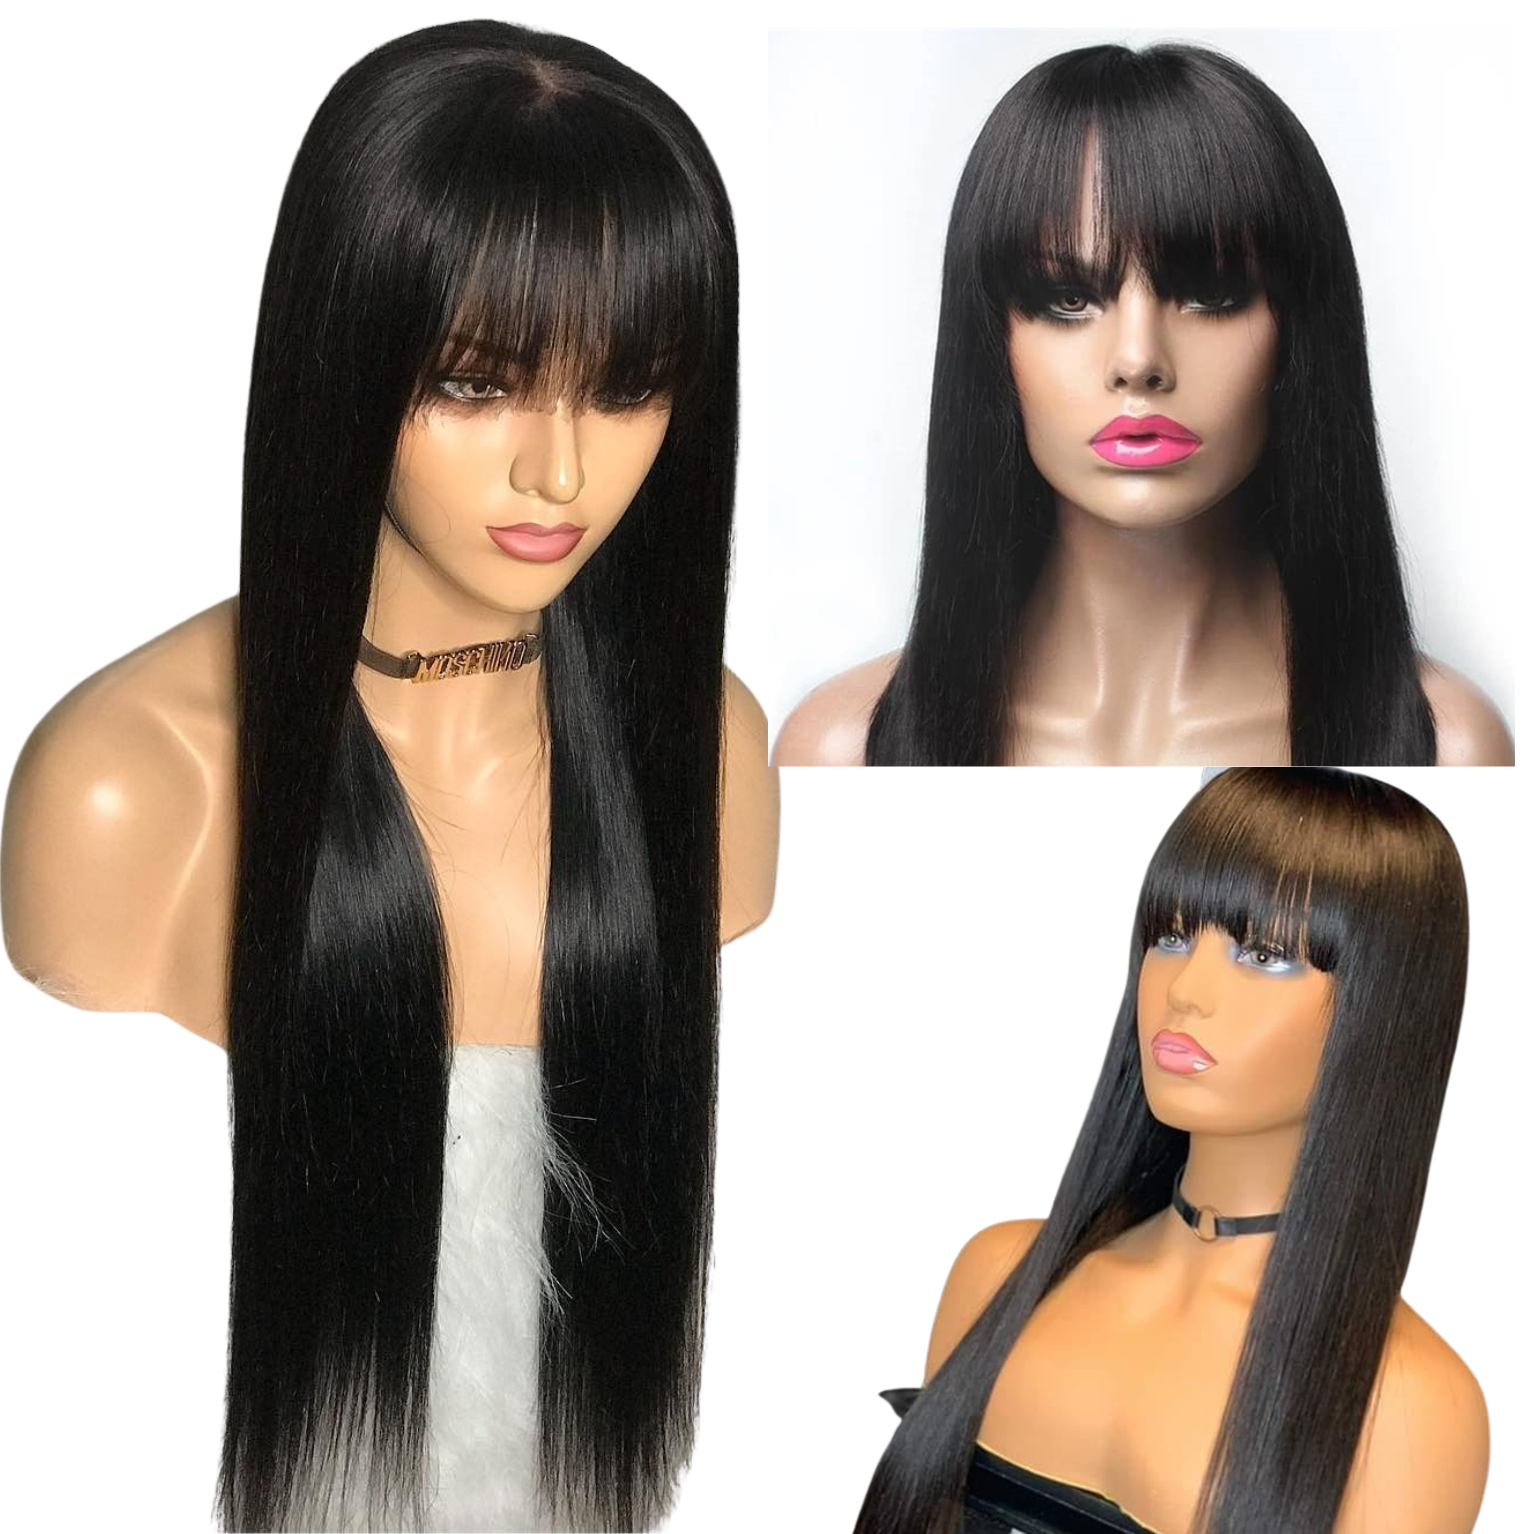 Human Hair Wig With Bangs | Short Bob Human Hair Wigs For Black Women 8-30 Inch Straight Bob Wig